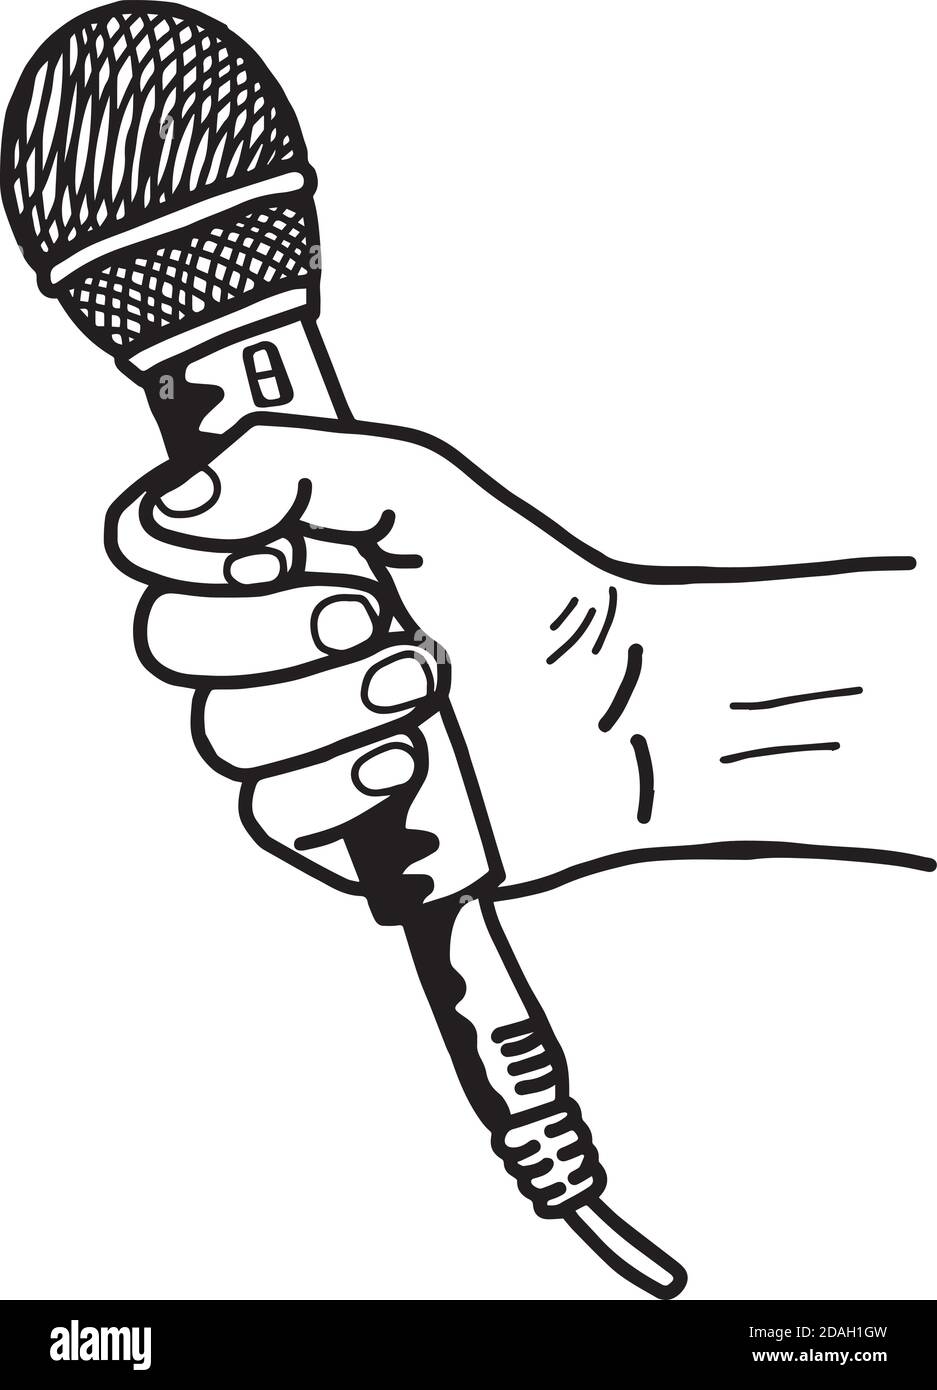 Illustration Vektor Doodle Hand gezeichnet von groben Skizze Hand hält  Mikrofon Stock-Vektorgrafik - Alamy